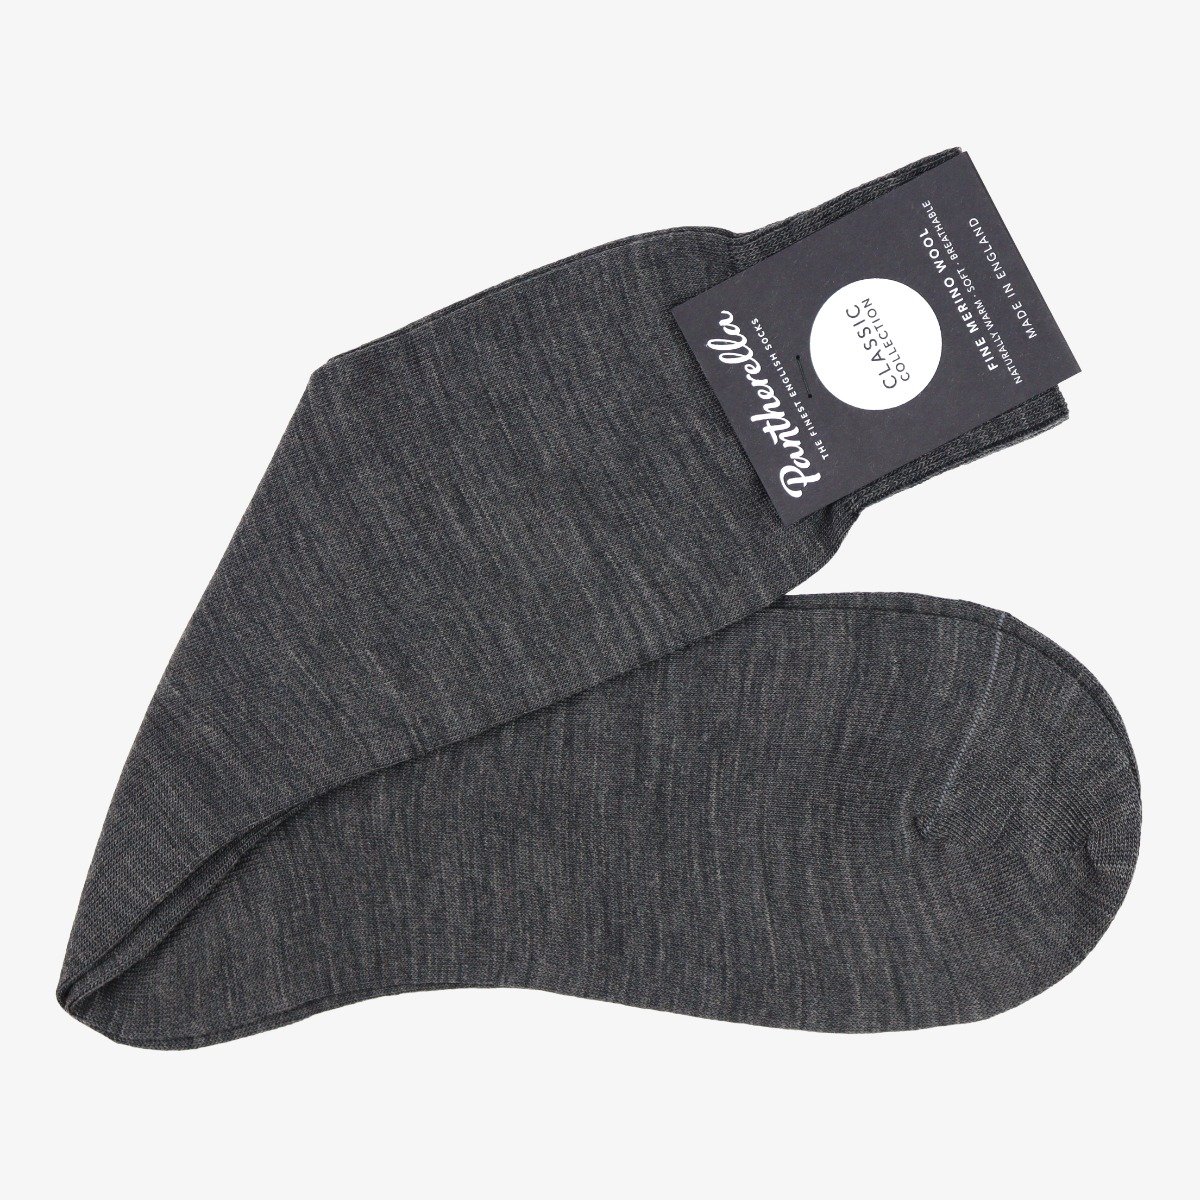 Pantherella Camden dark grey merino wool men's socks